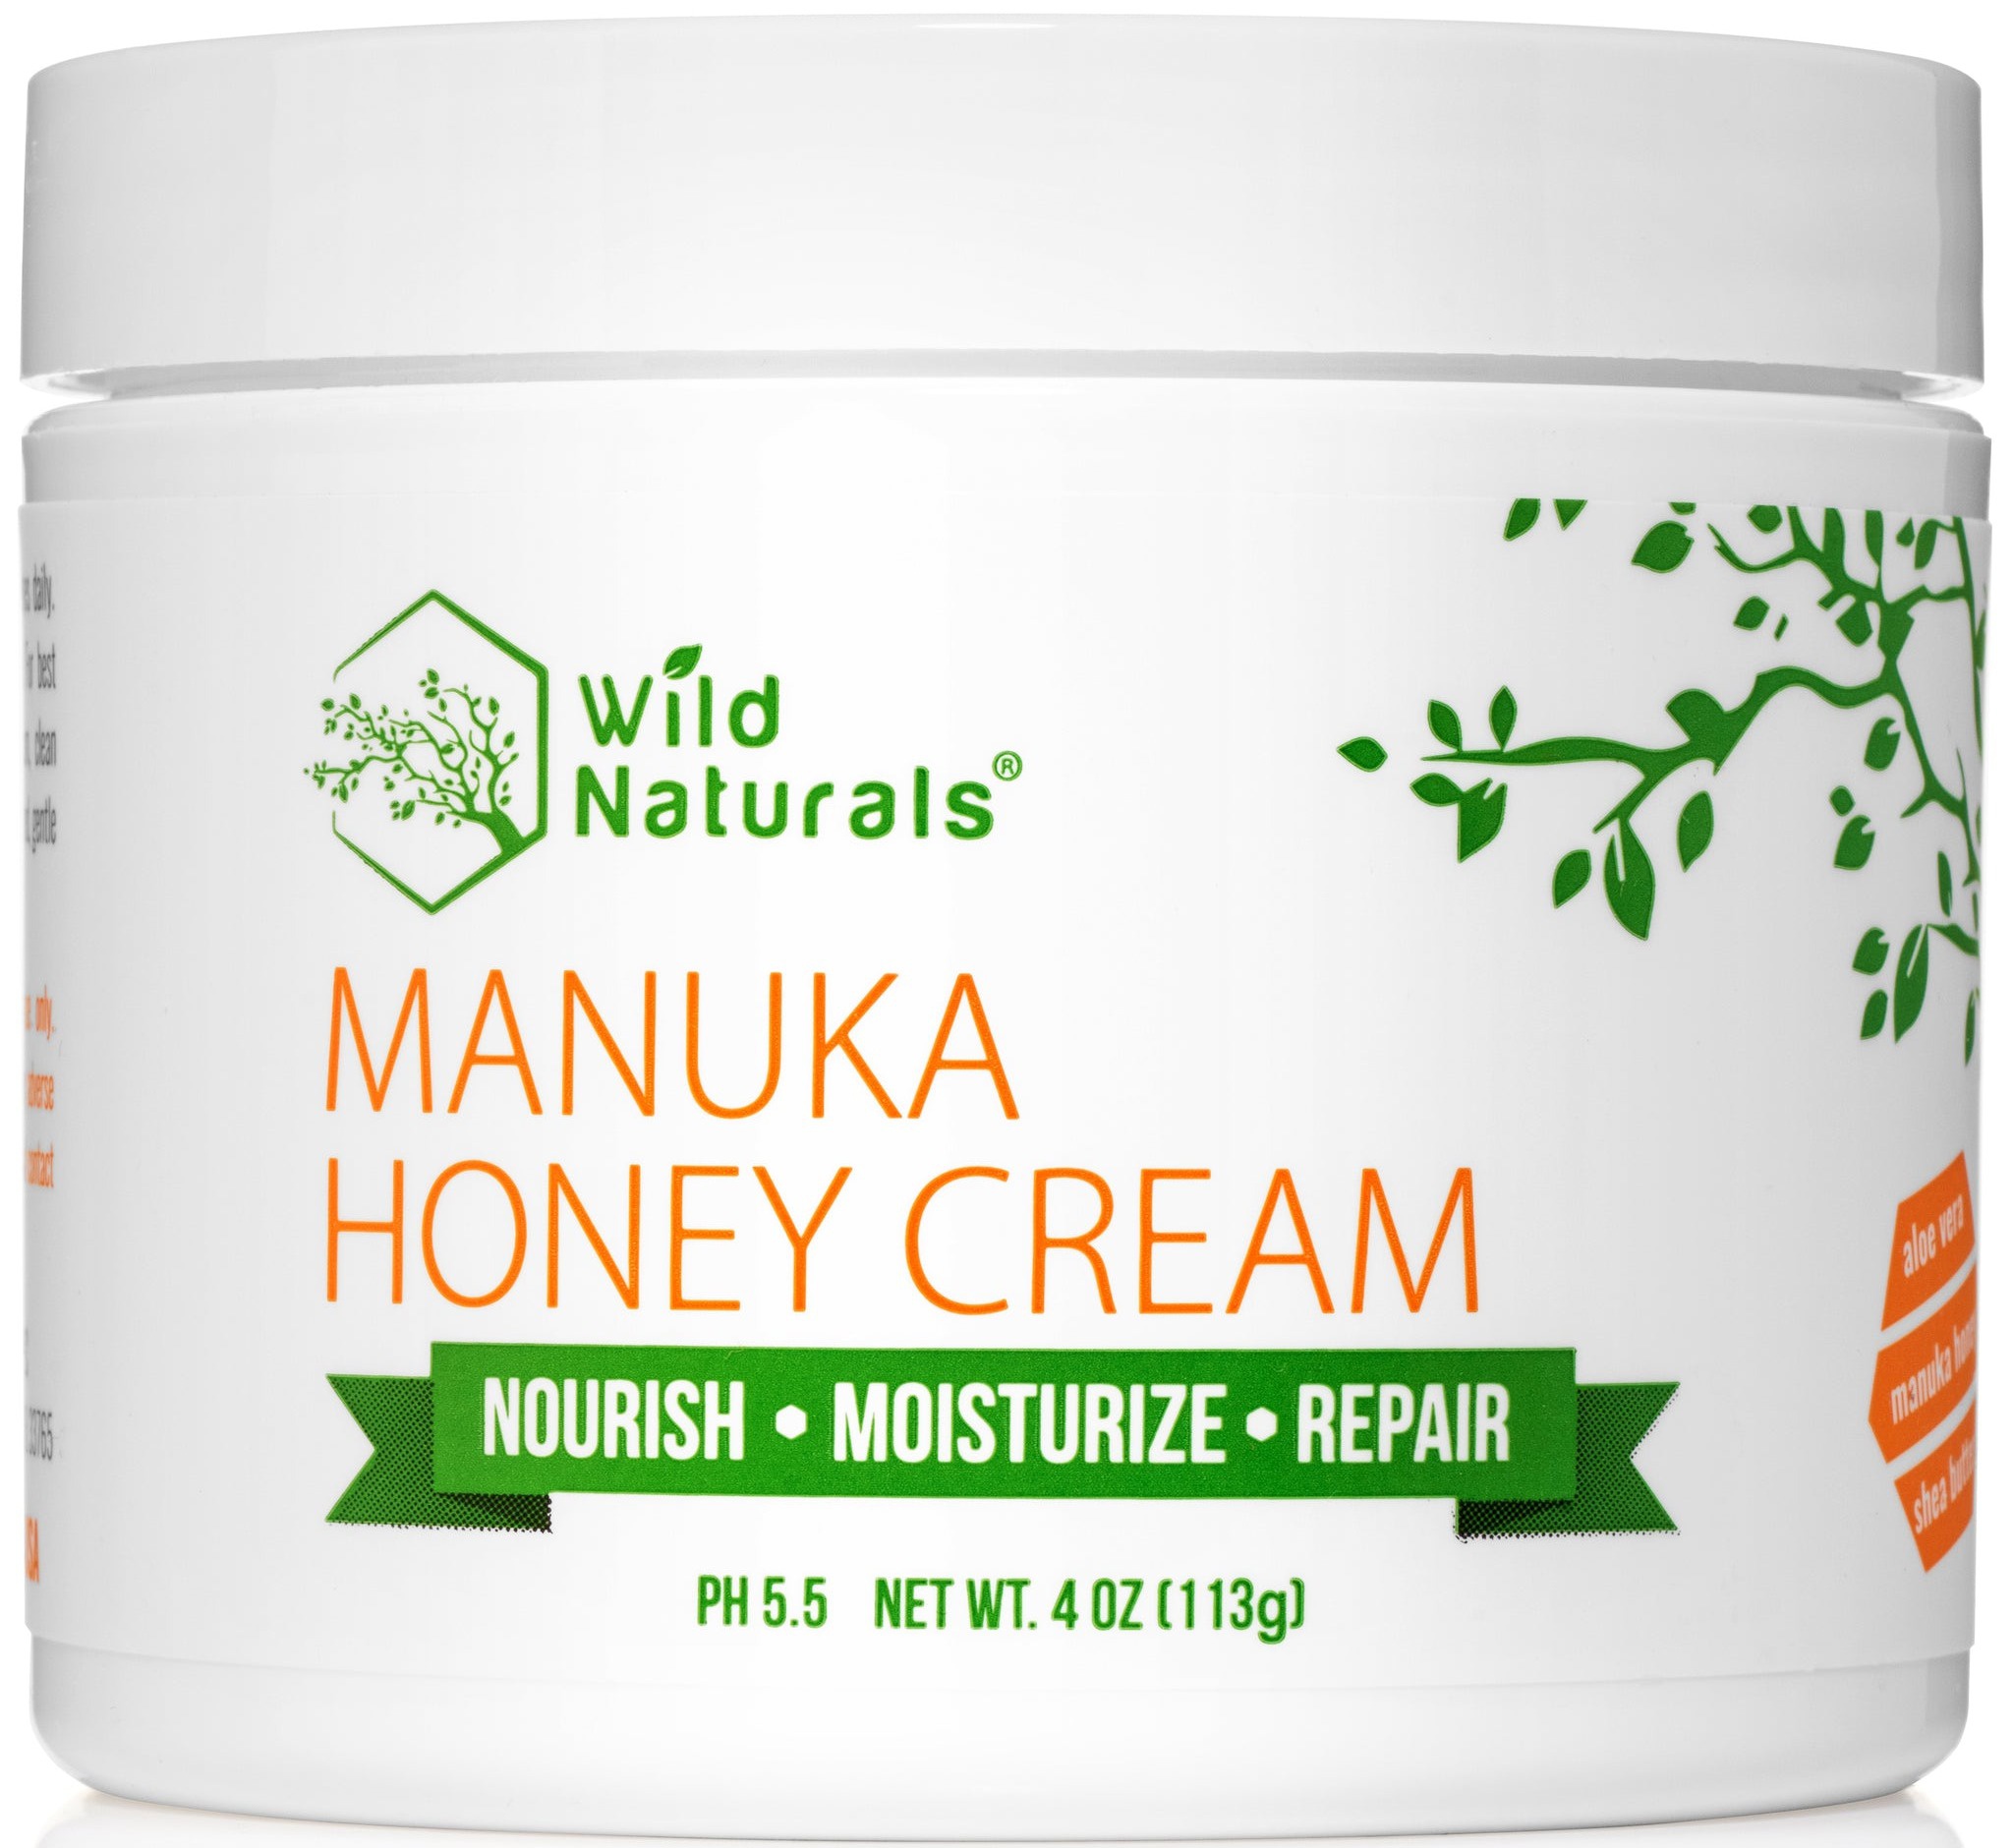 Wild naturals Manuka Honey Cream